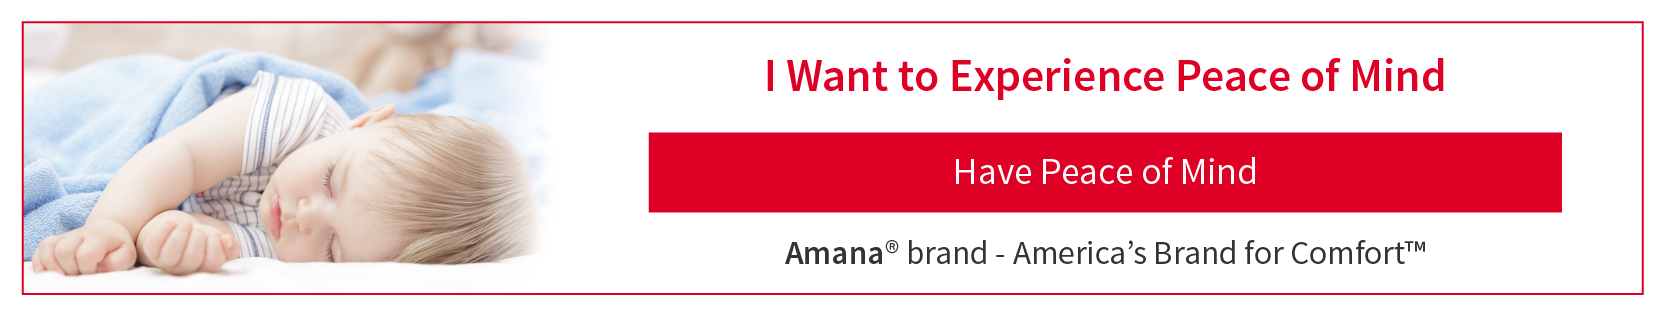 Amana brand peace of mind